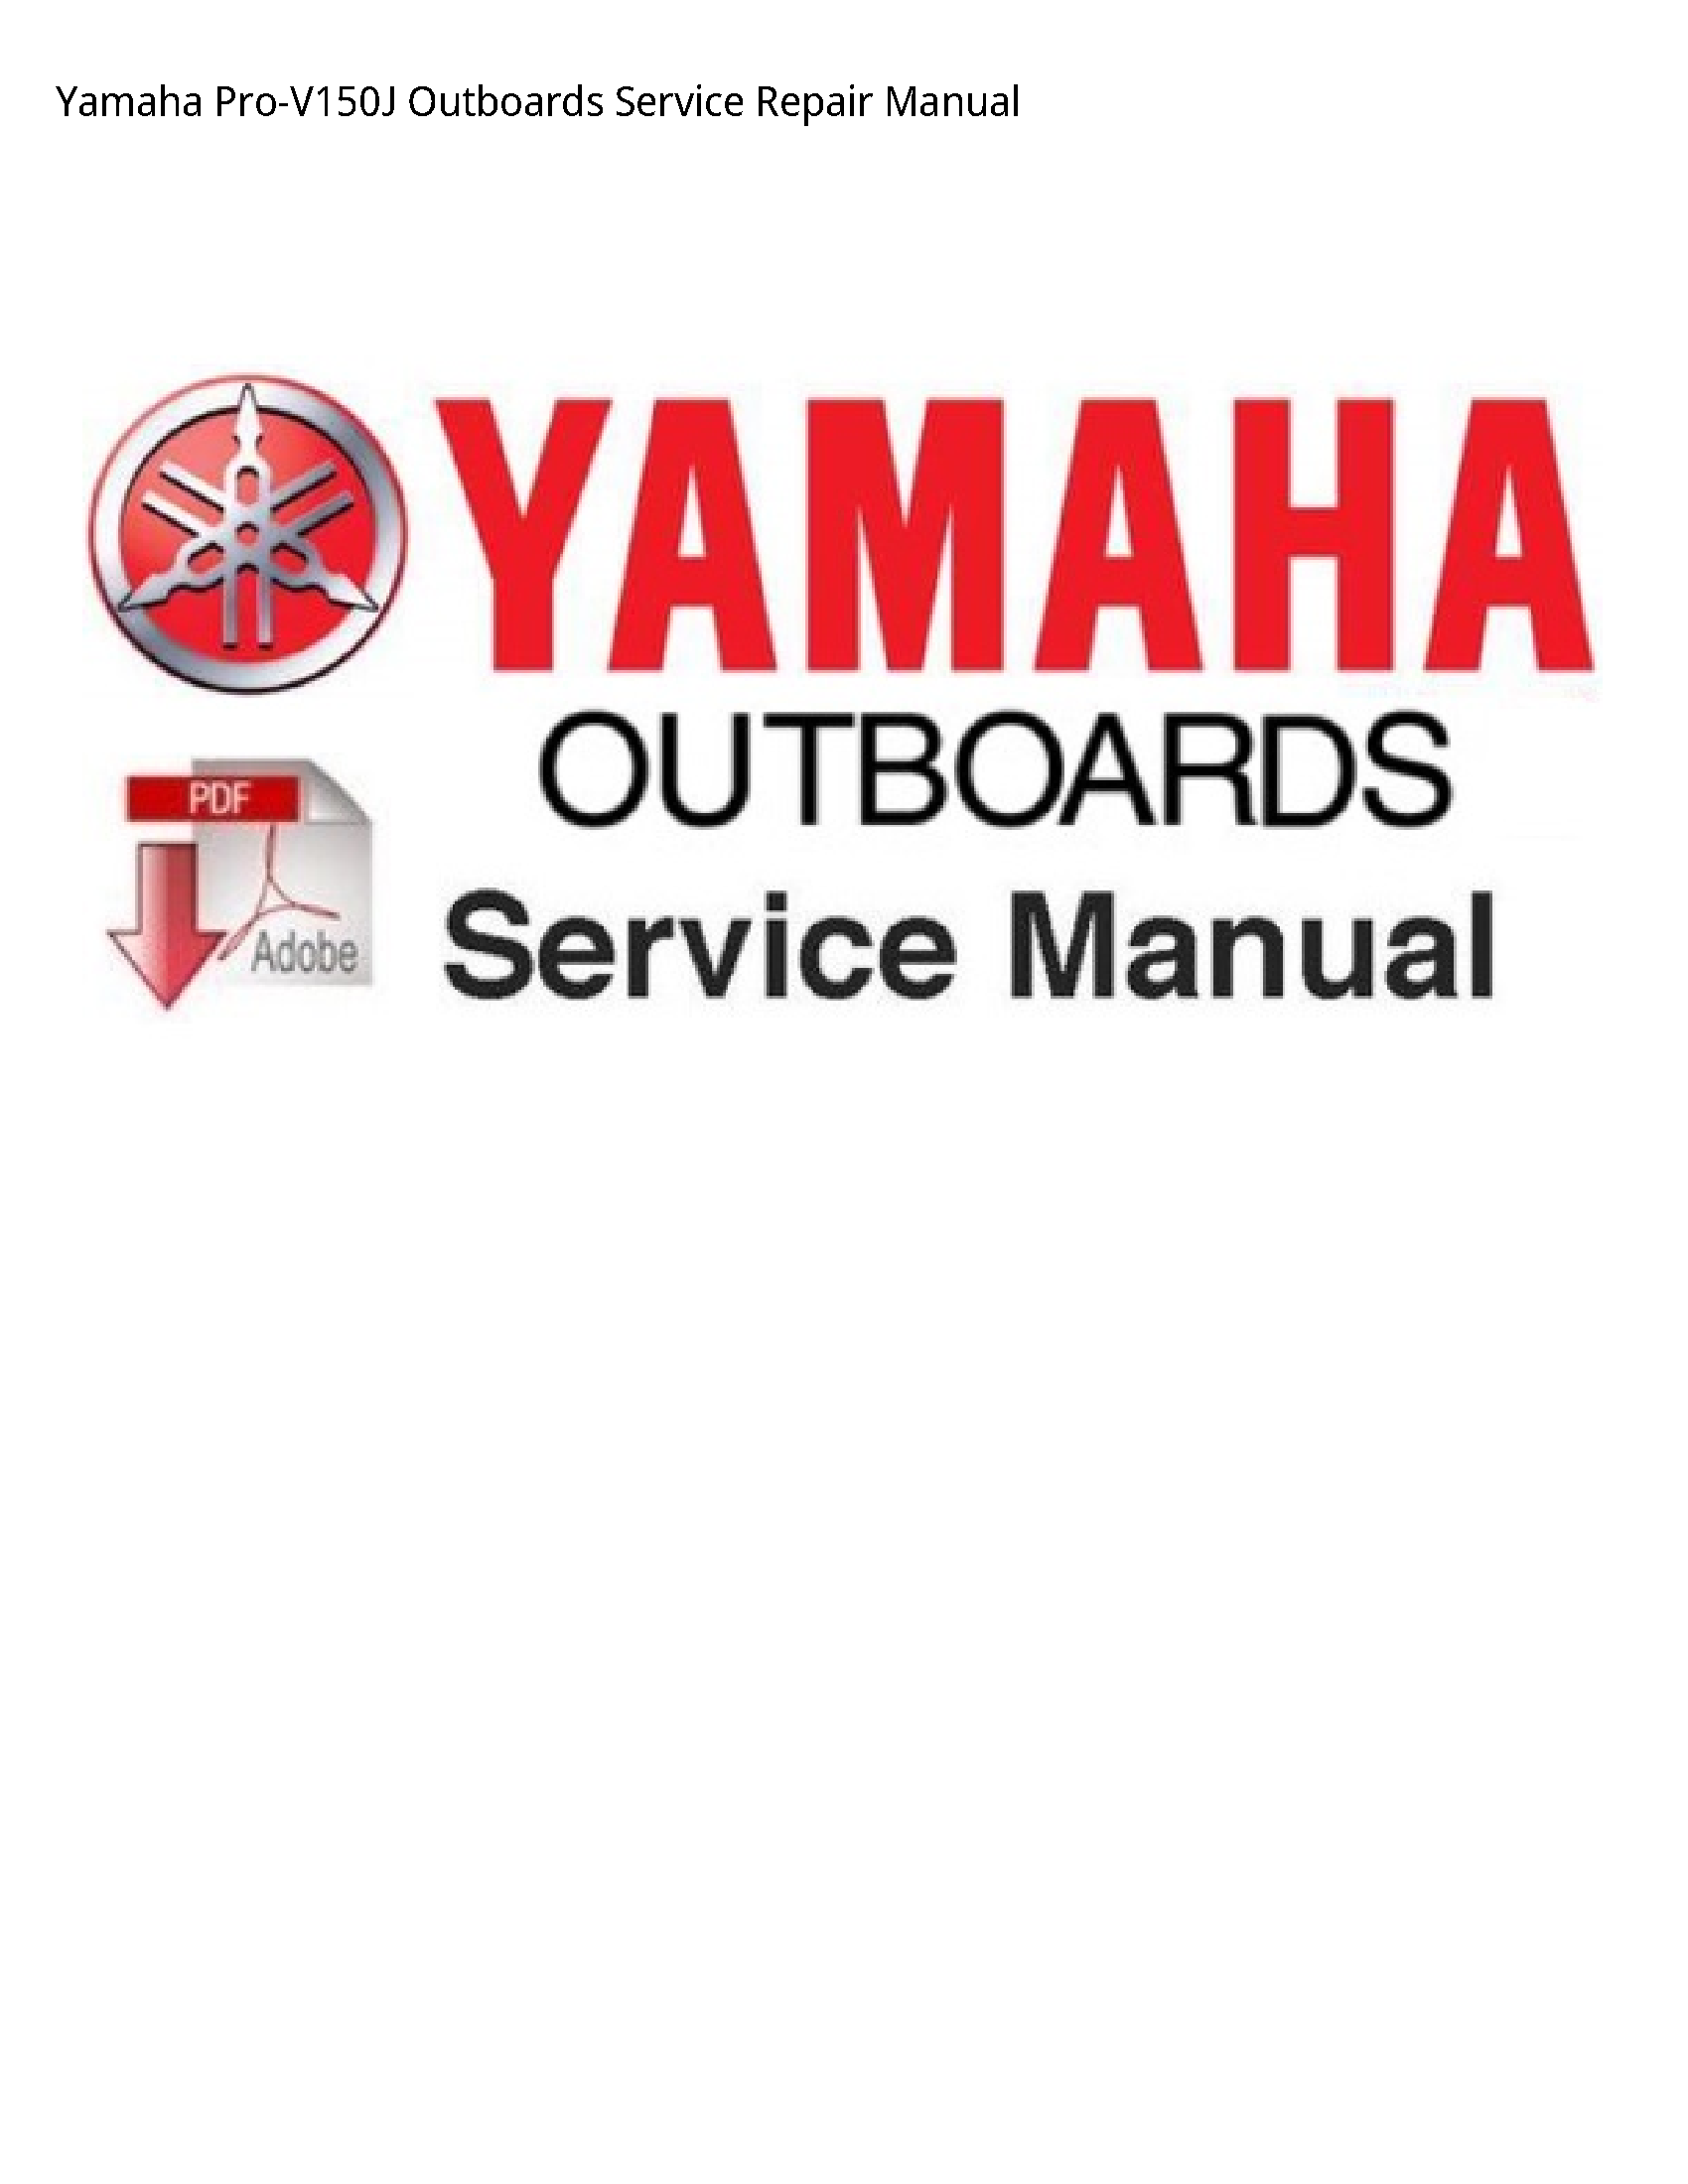 Yamaha Pro-V150J Outboards manual